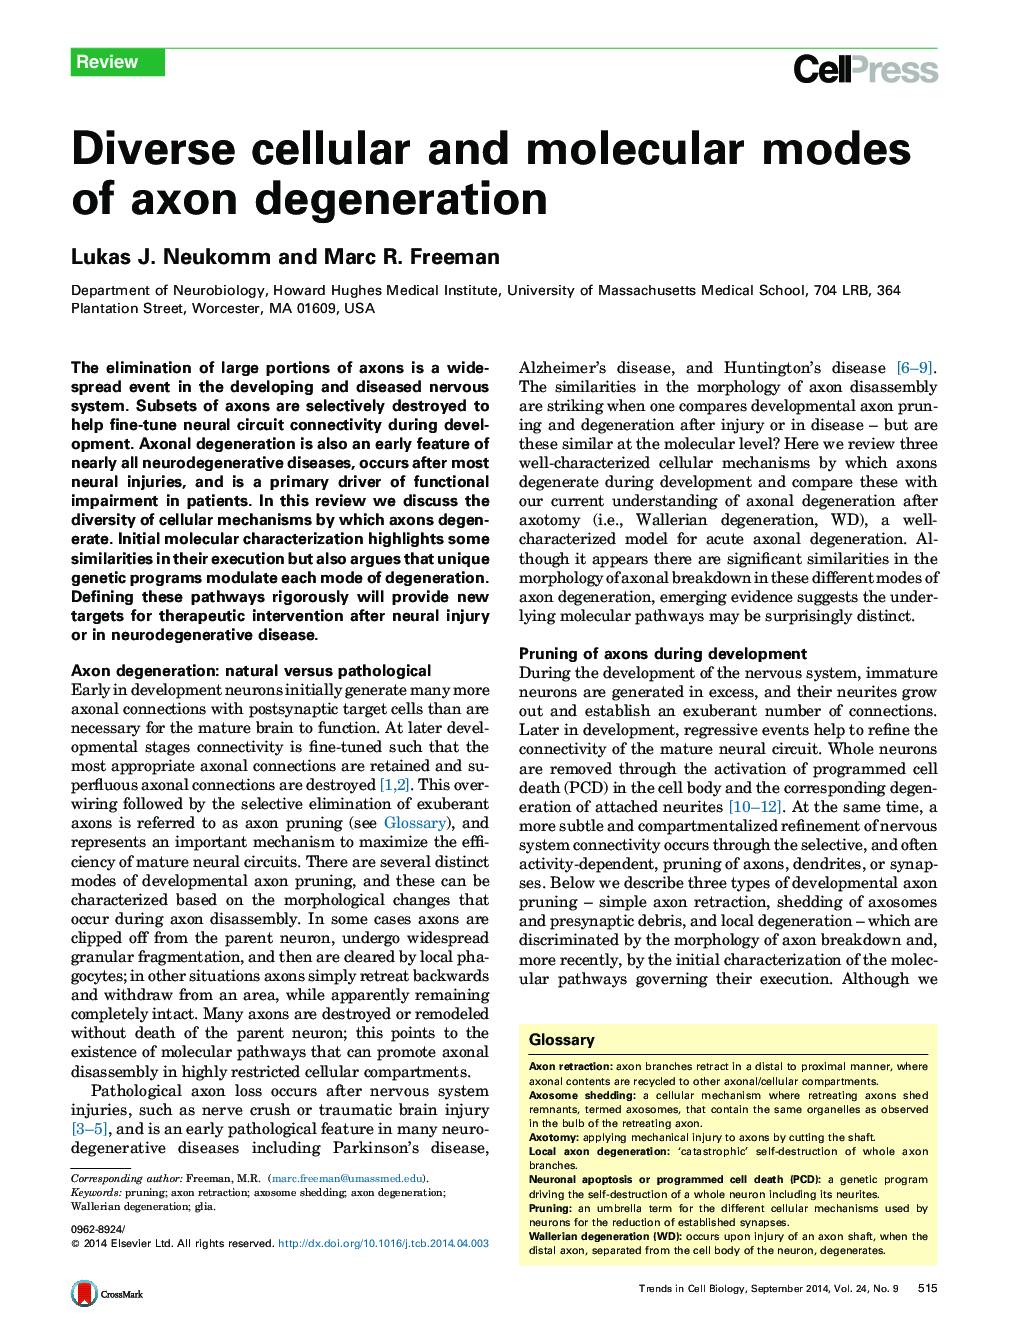 Diverse cellular and molecular modes of axon degeneration